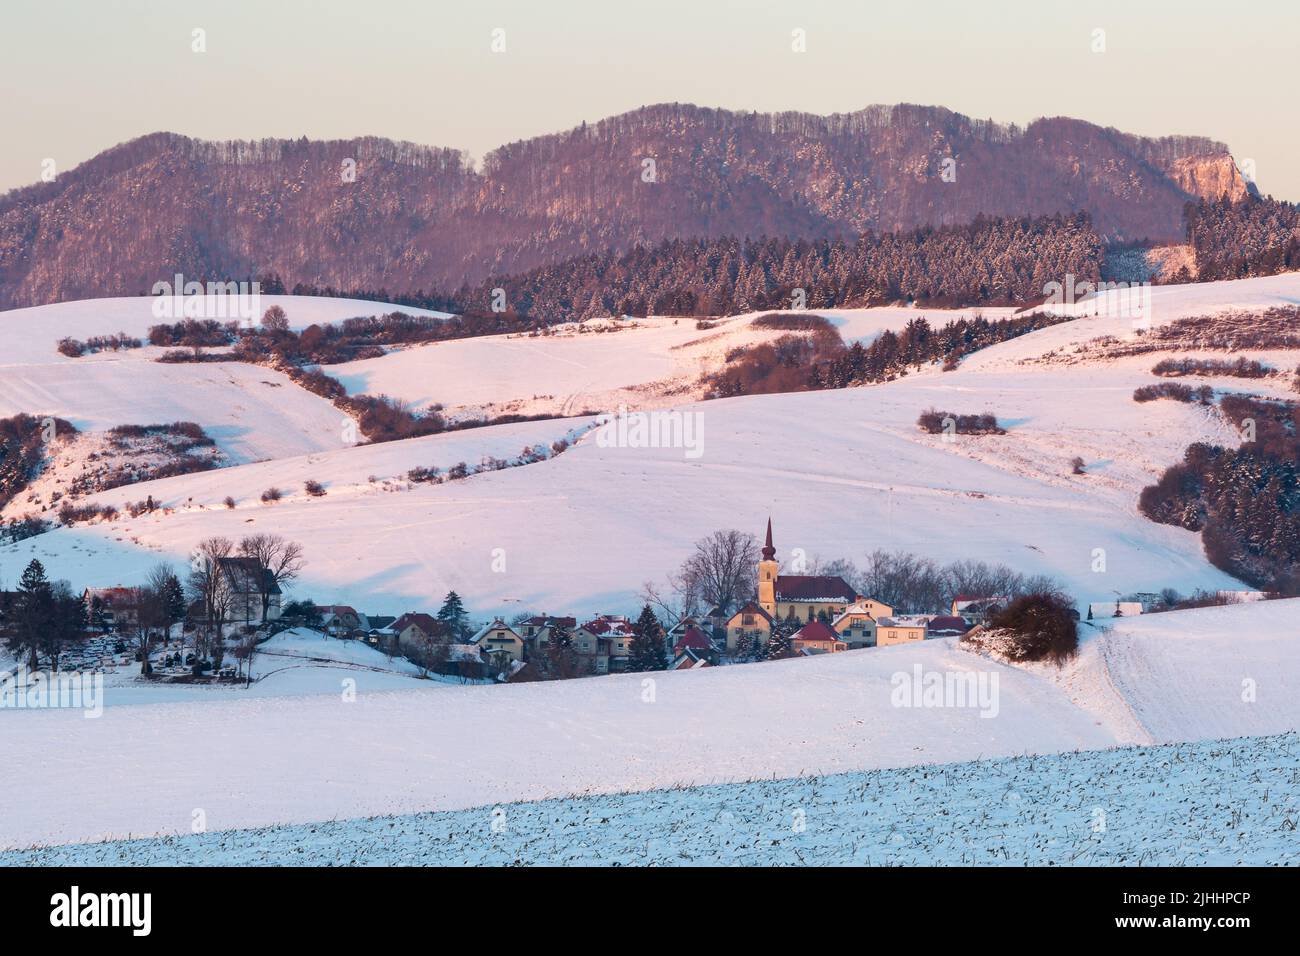 Turcianske Jaseno and the rural landscape of Turiec basin, Slovakia. Stock Photo